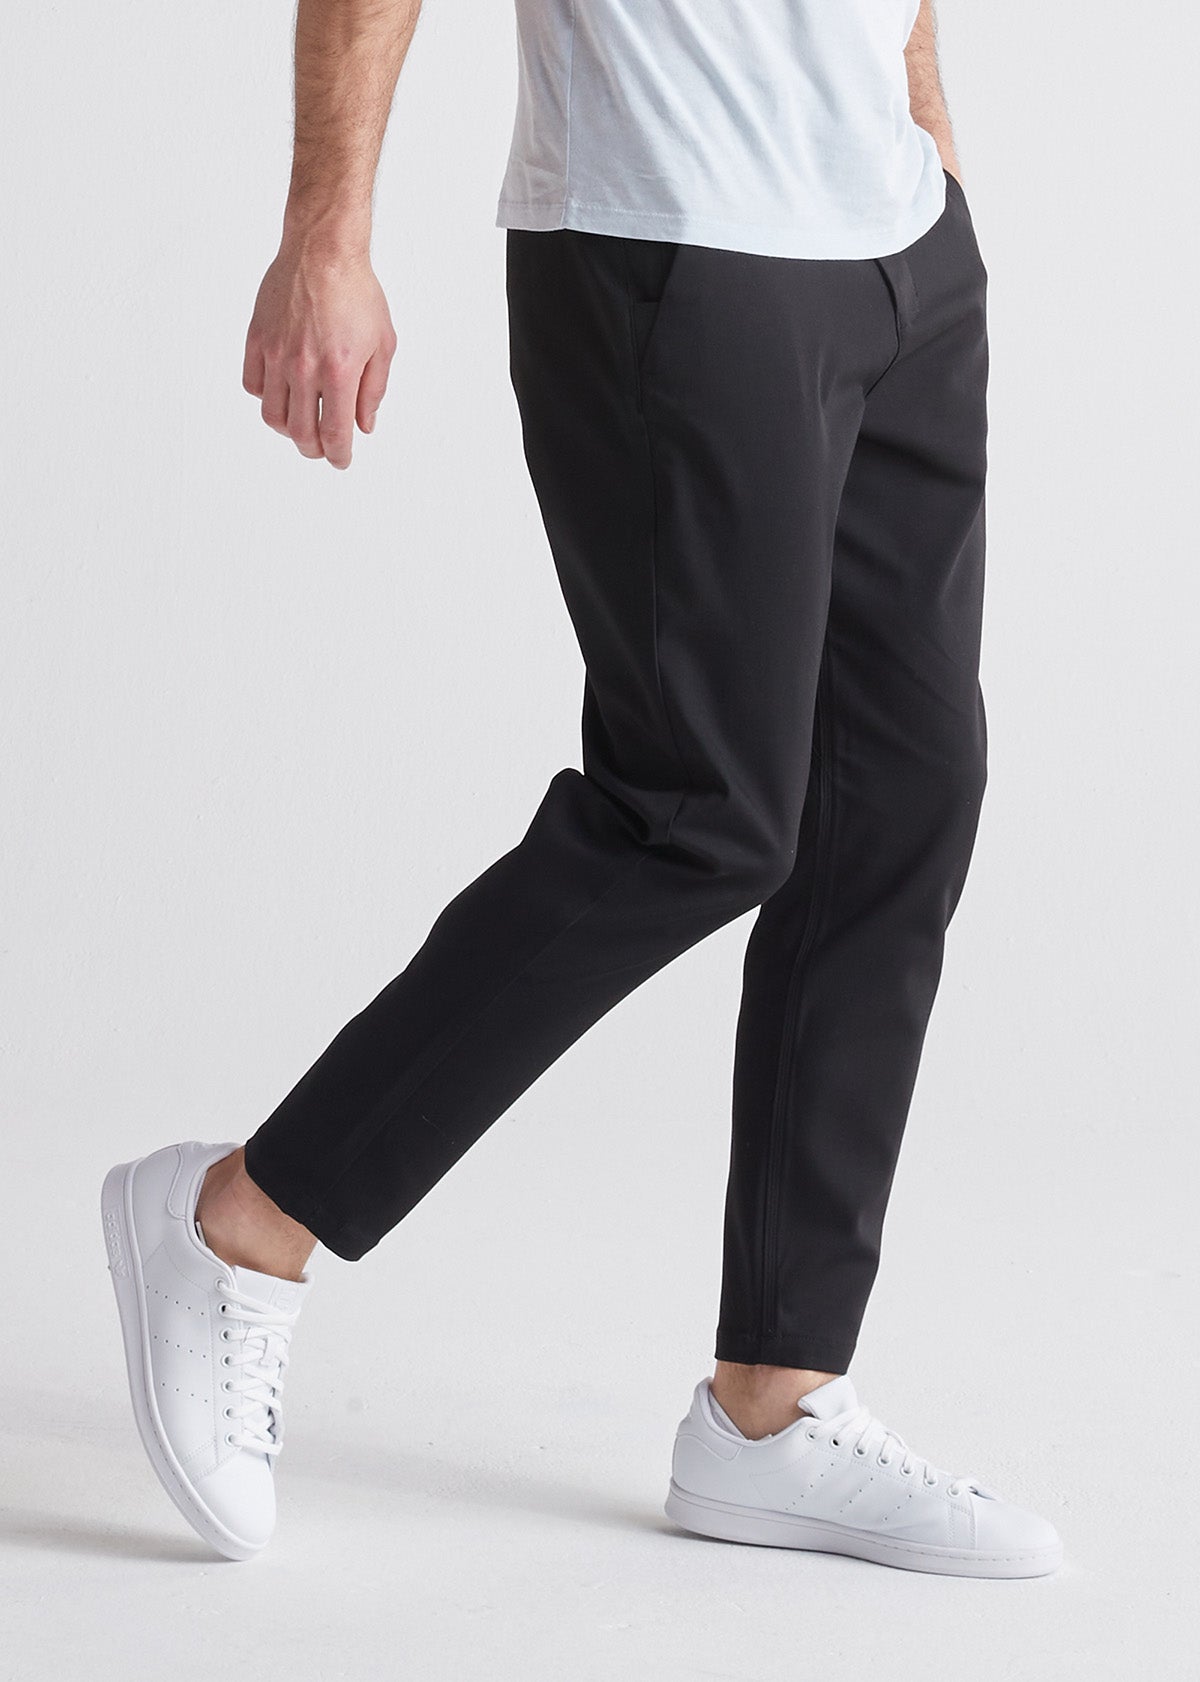 Men's Straight Fit Black Stretch Dress Pant Side